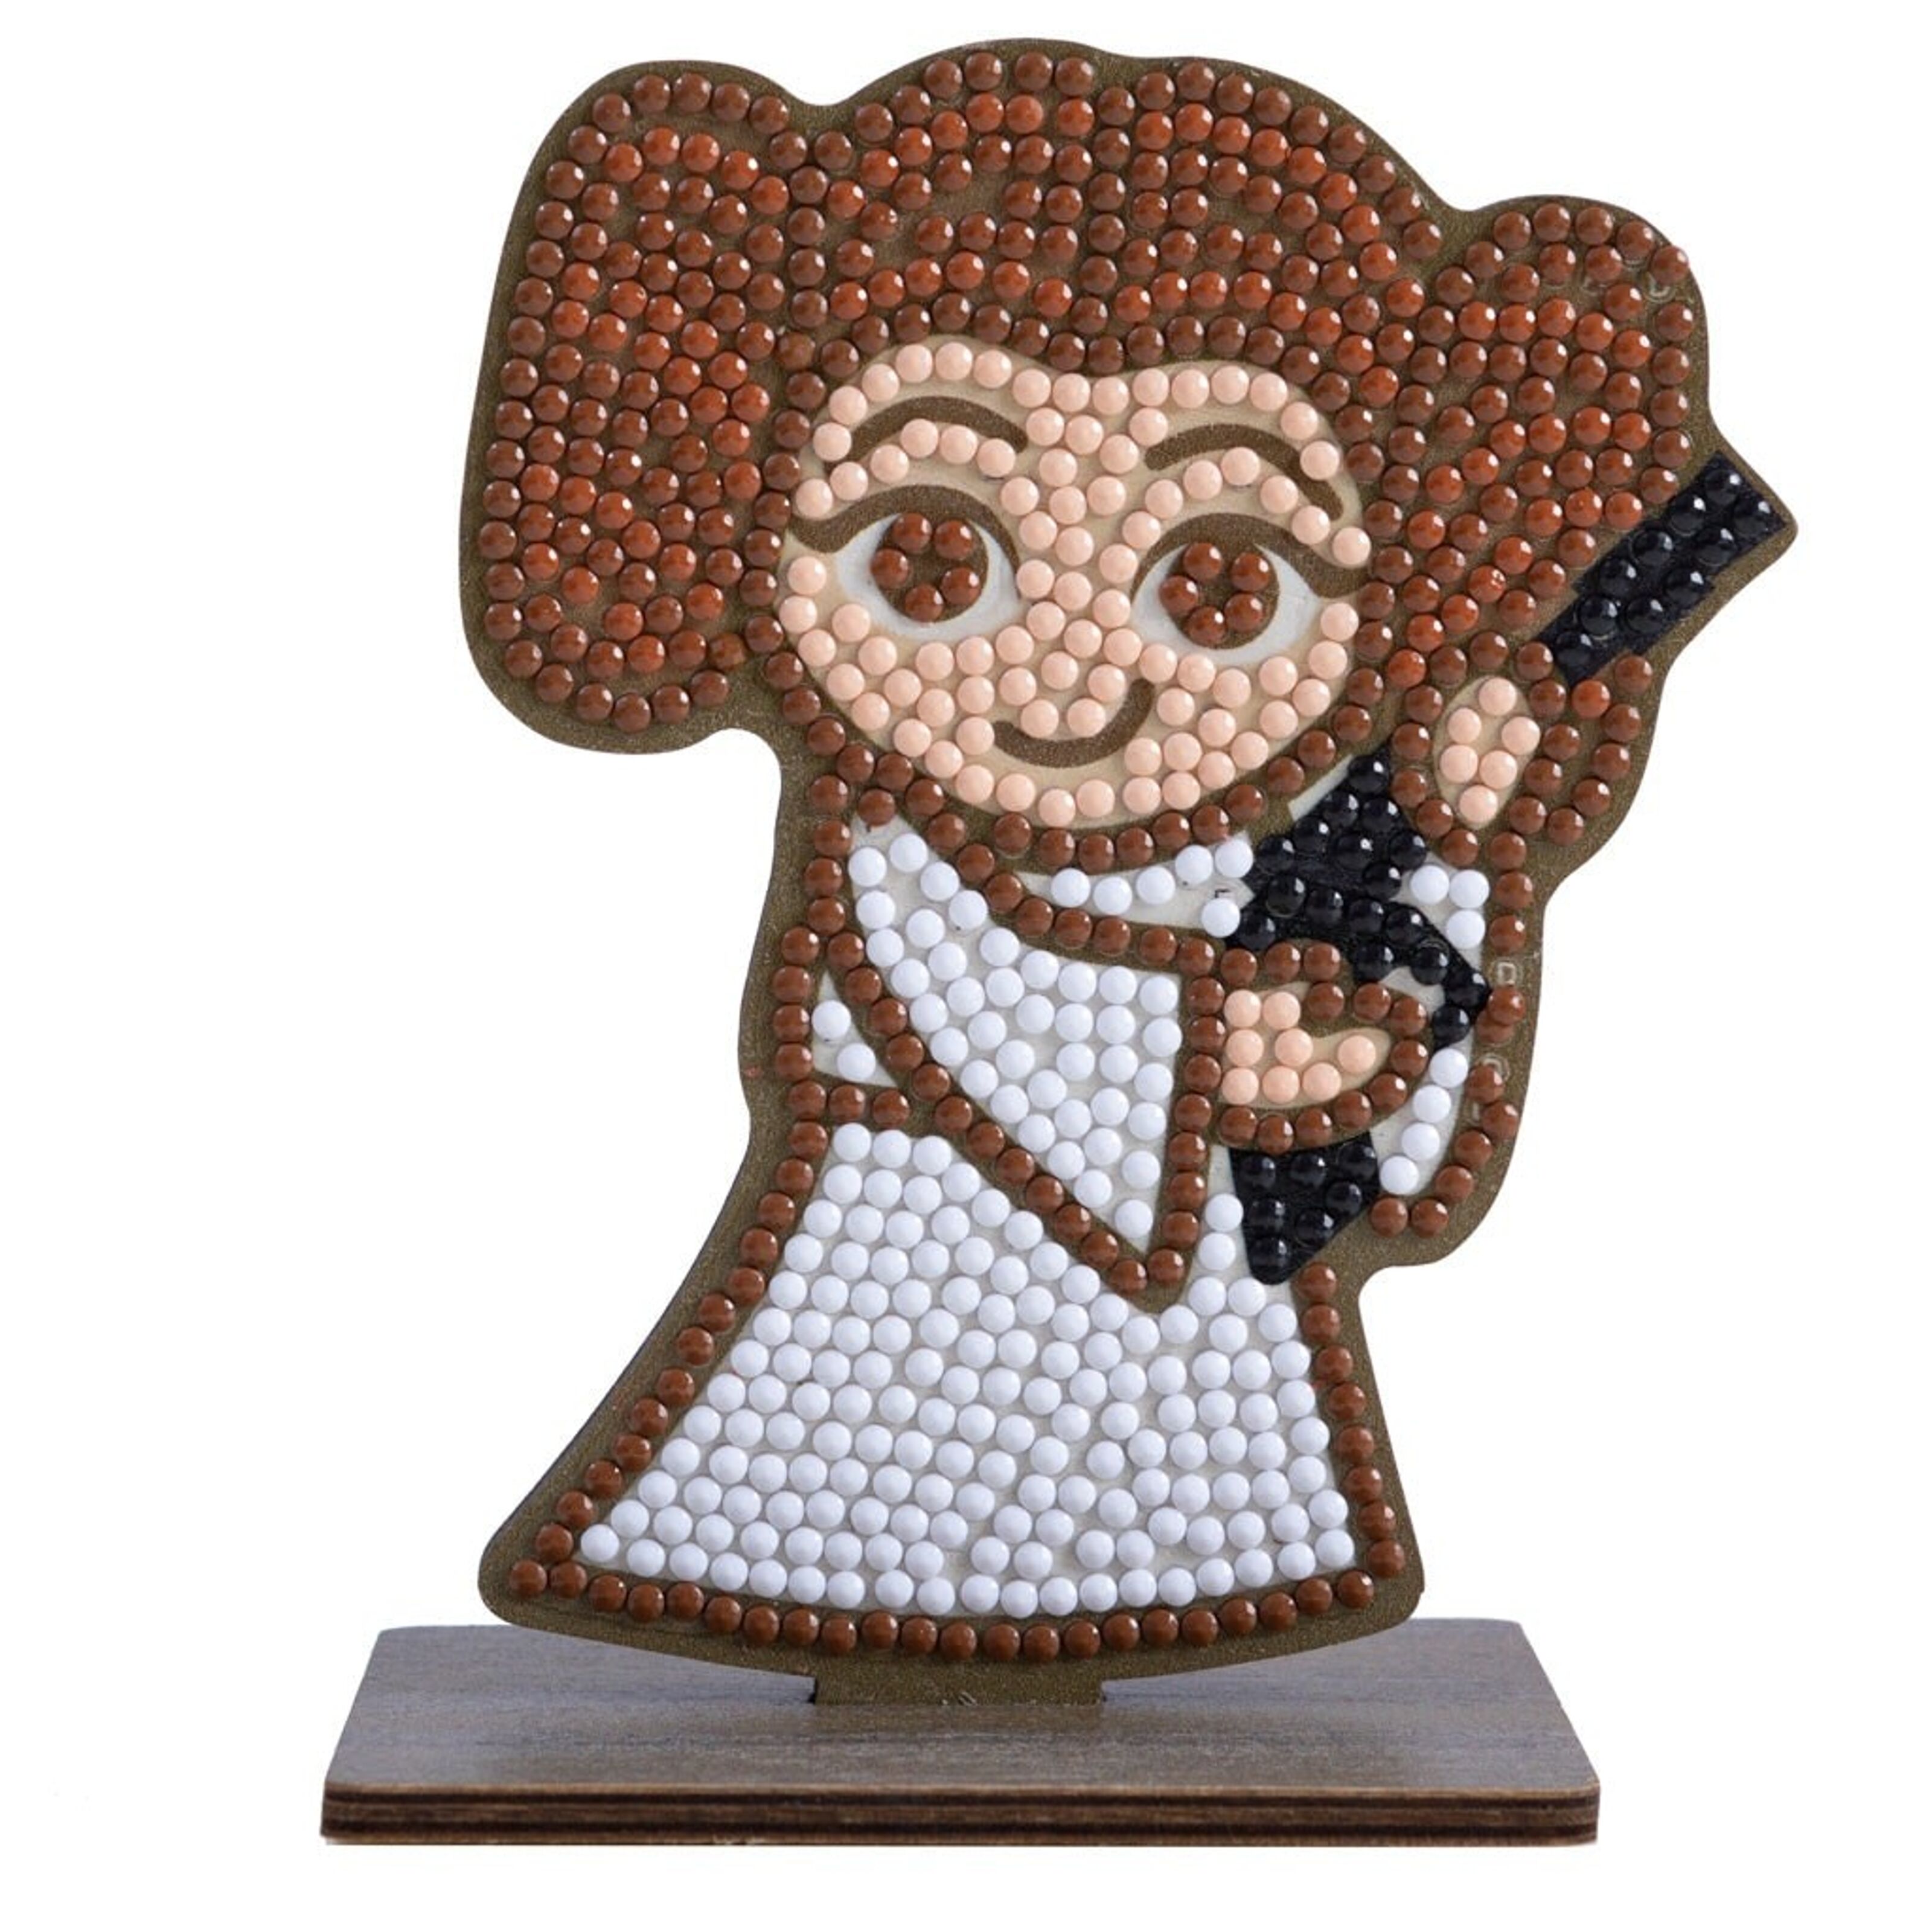 Princess Leia, wholesale Art Buy Buddy Crystal